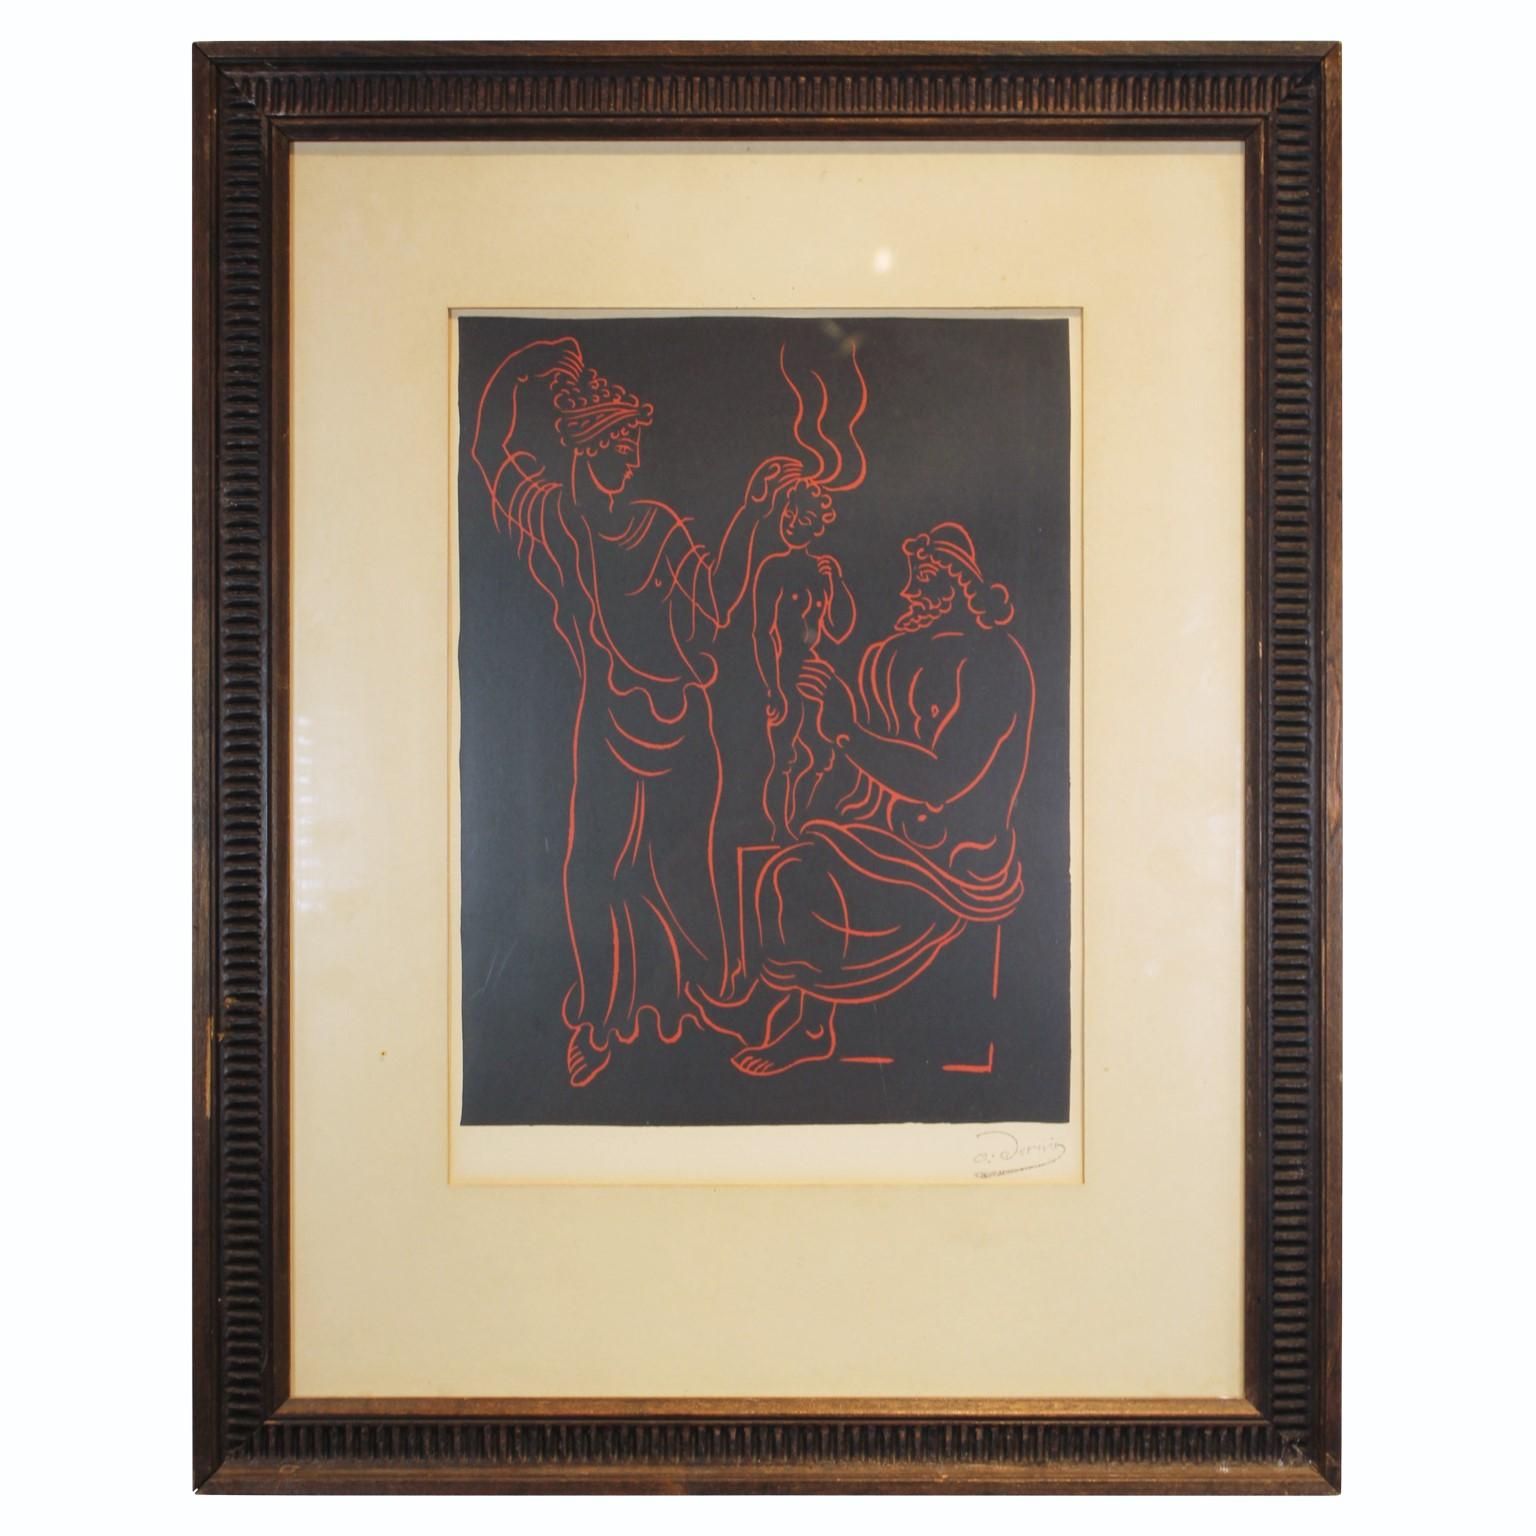 André Derain Figurative Print - "L'Enfant" Reprinted Print for the Collectors Guild